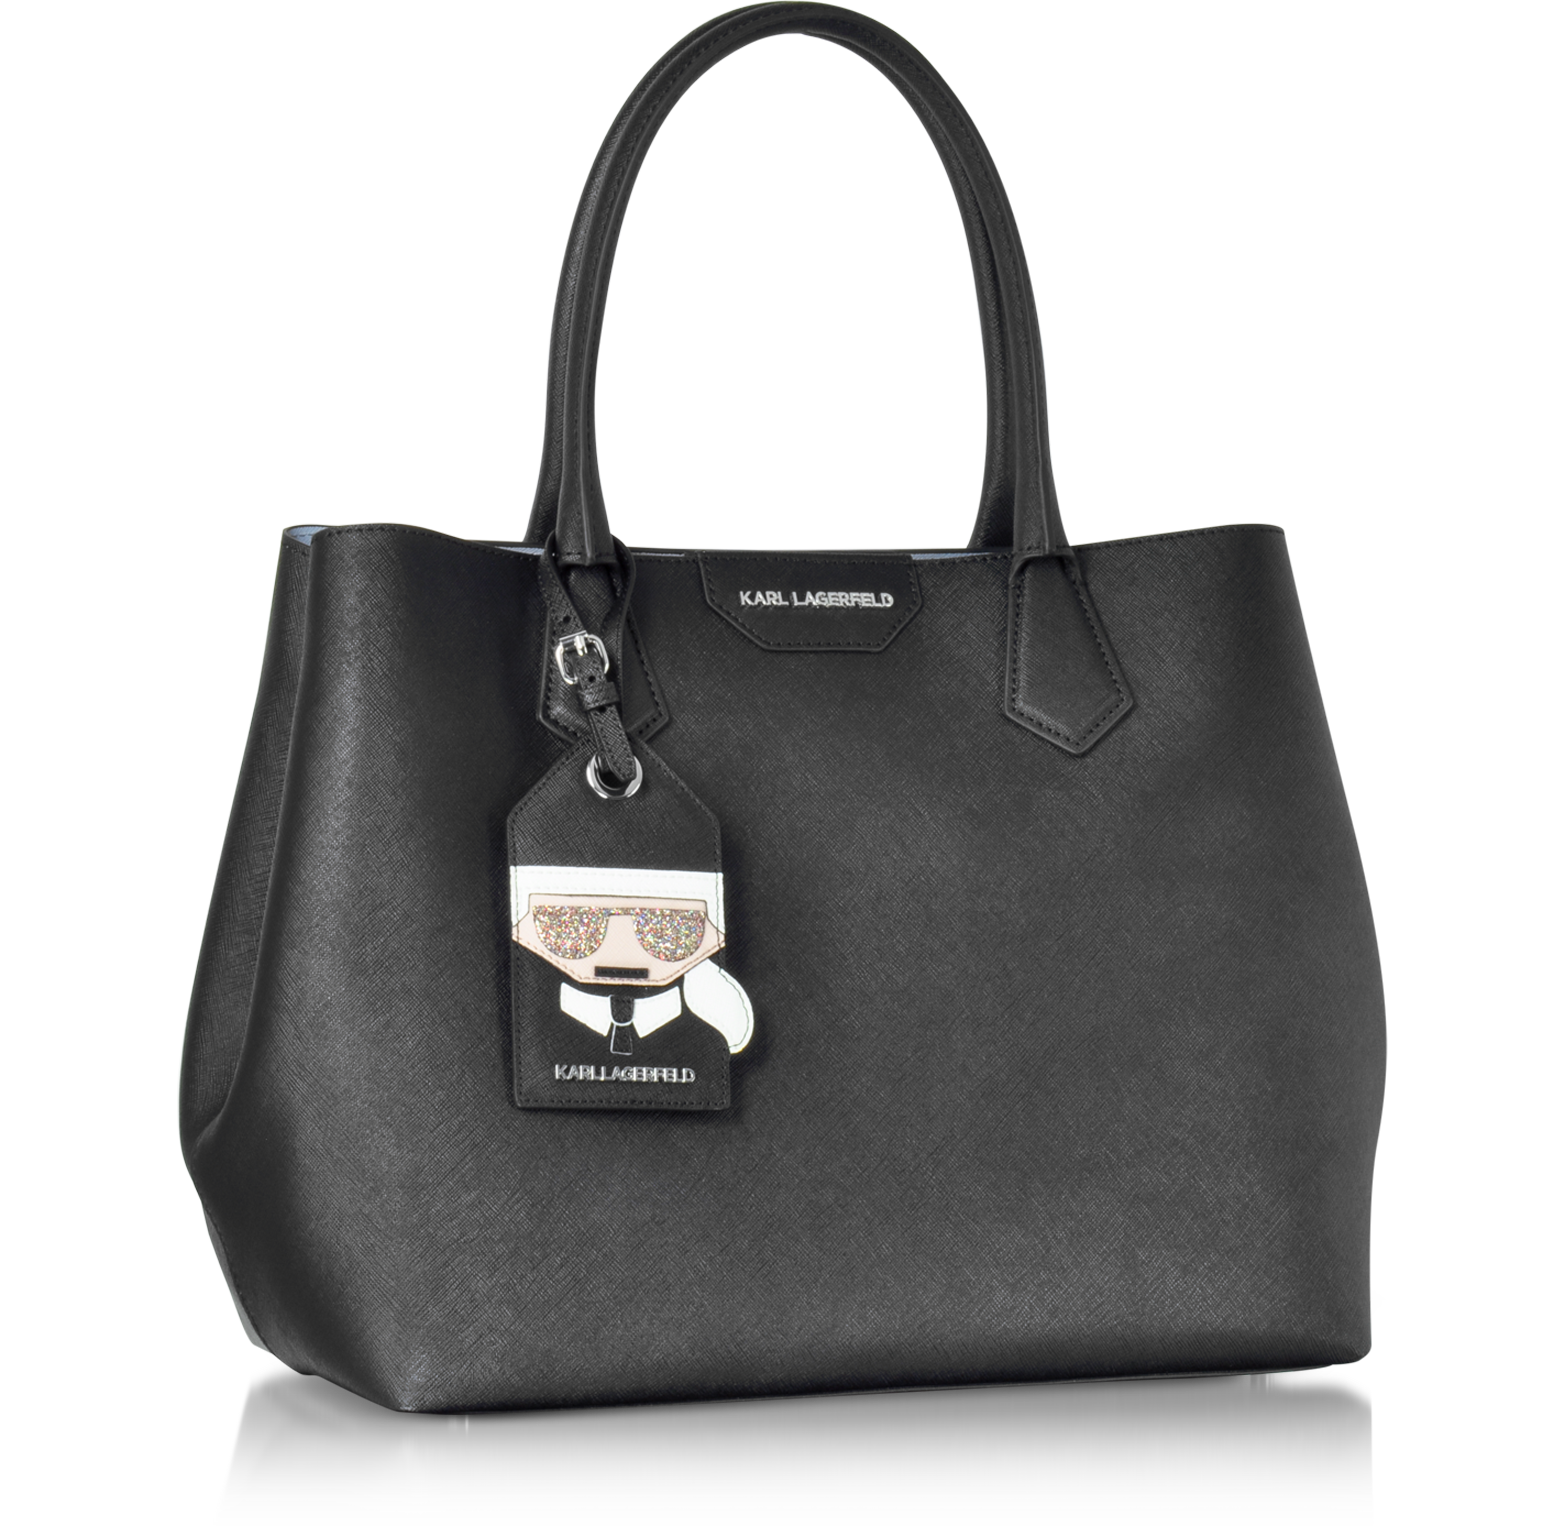 Karl Lagerfeld K/Shopper Black Leather Tote Bag w/Luggage Tag at FORZIERI